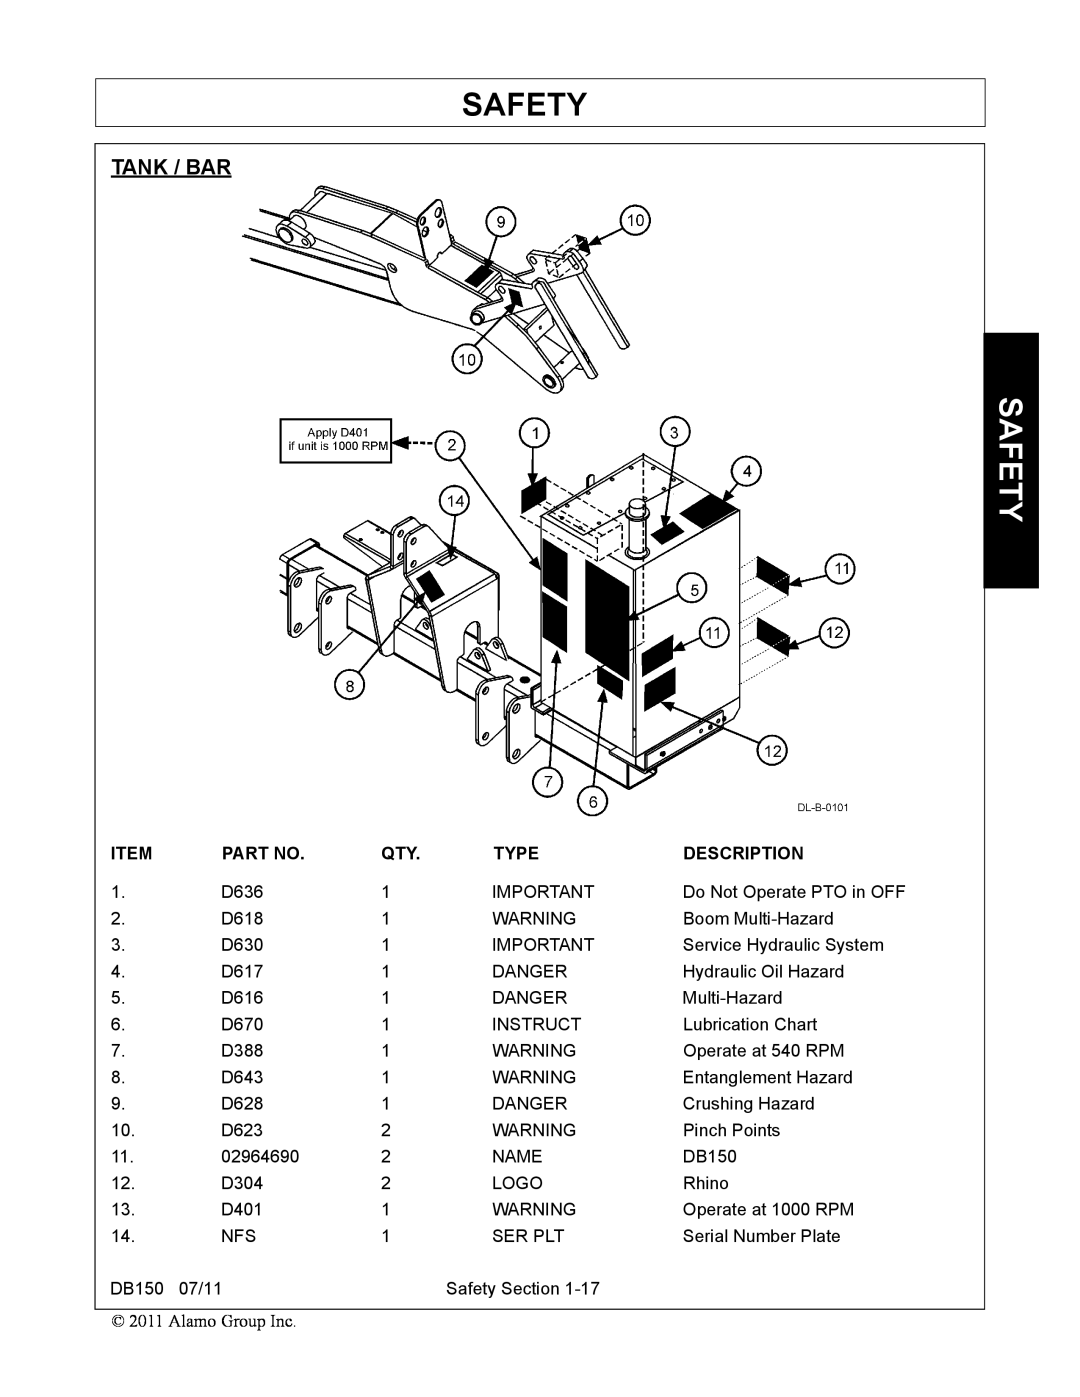 Rhino Mounts DB150 manual Safety, Tank / Bar, Type, Description 